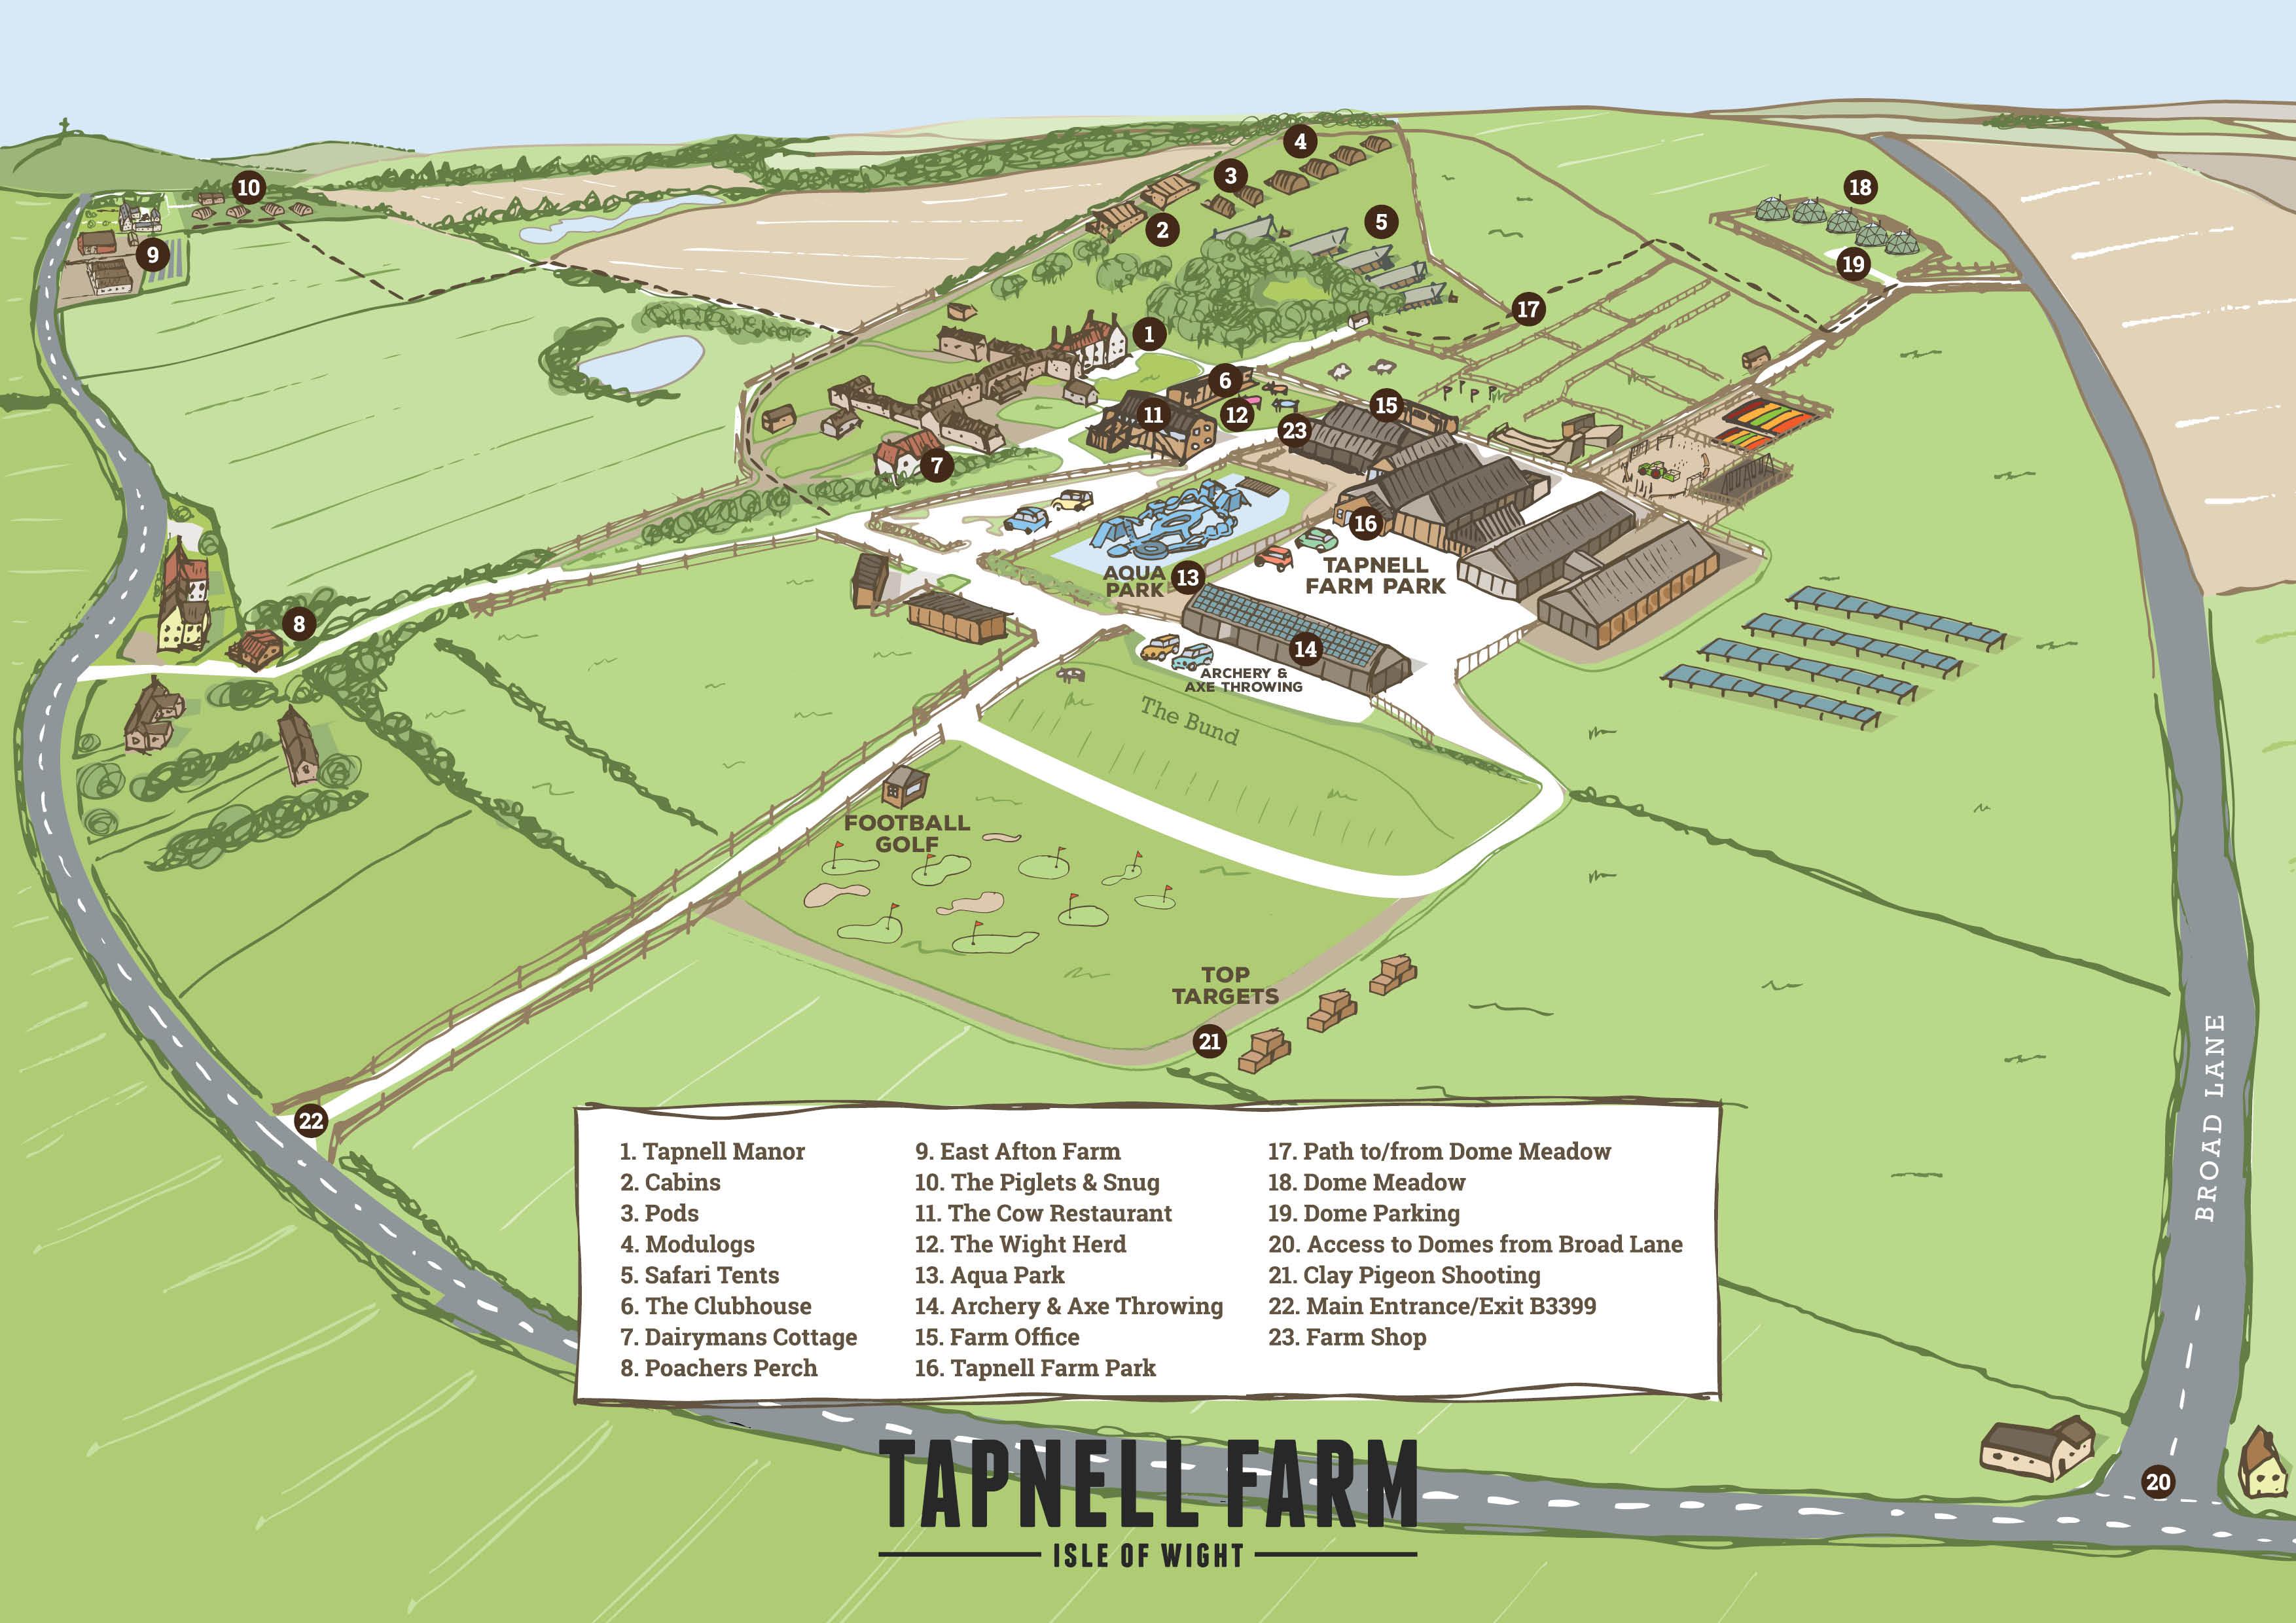 Tapnell Farm Map with Key